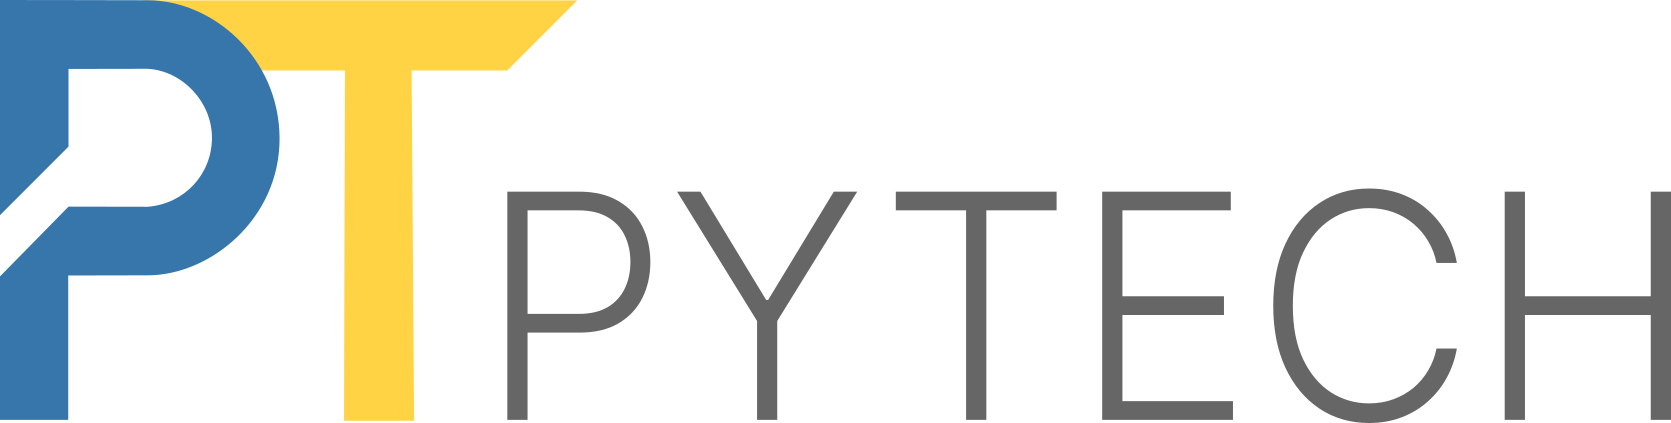 63_logo-pytech.png